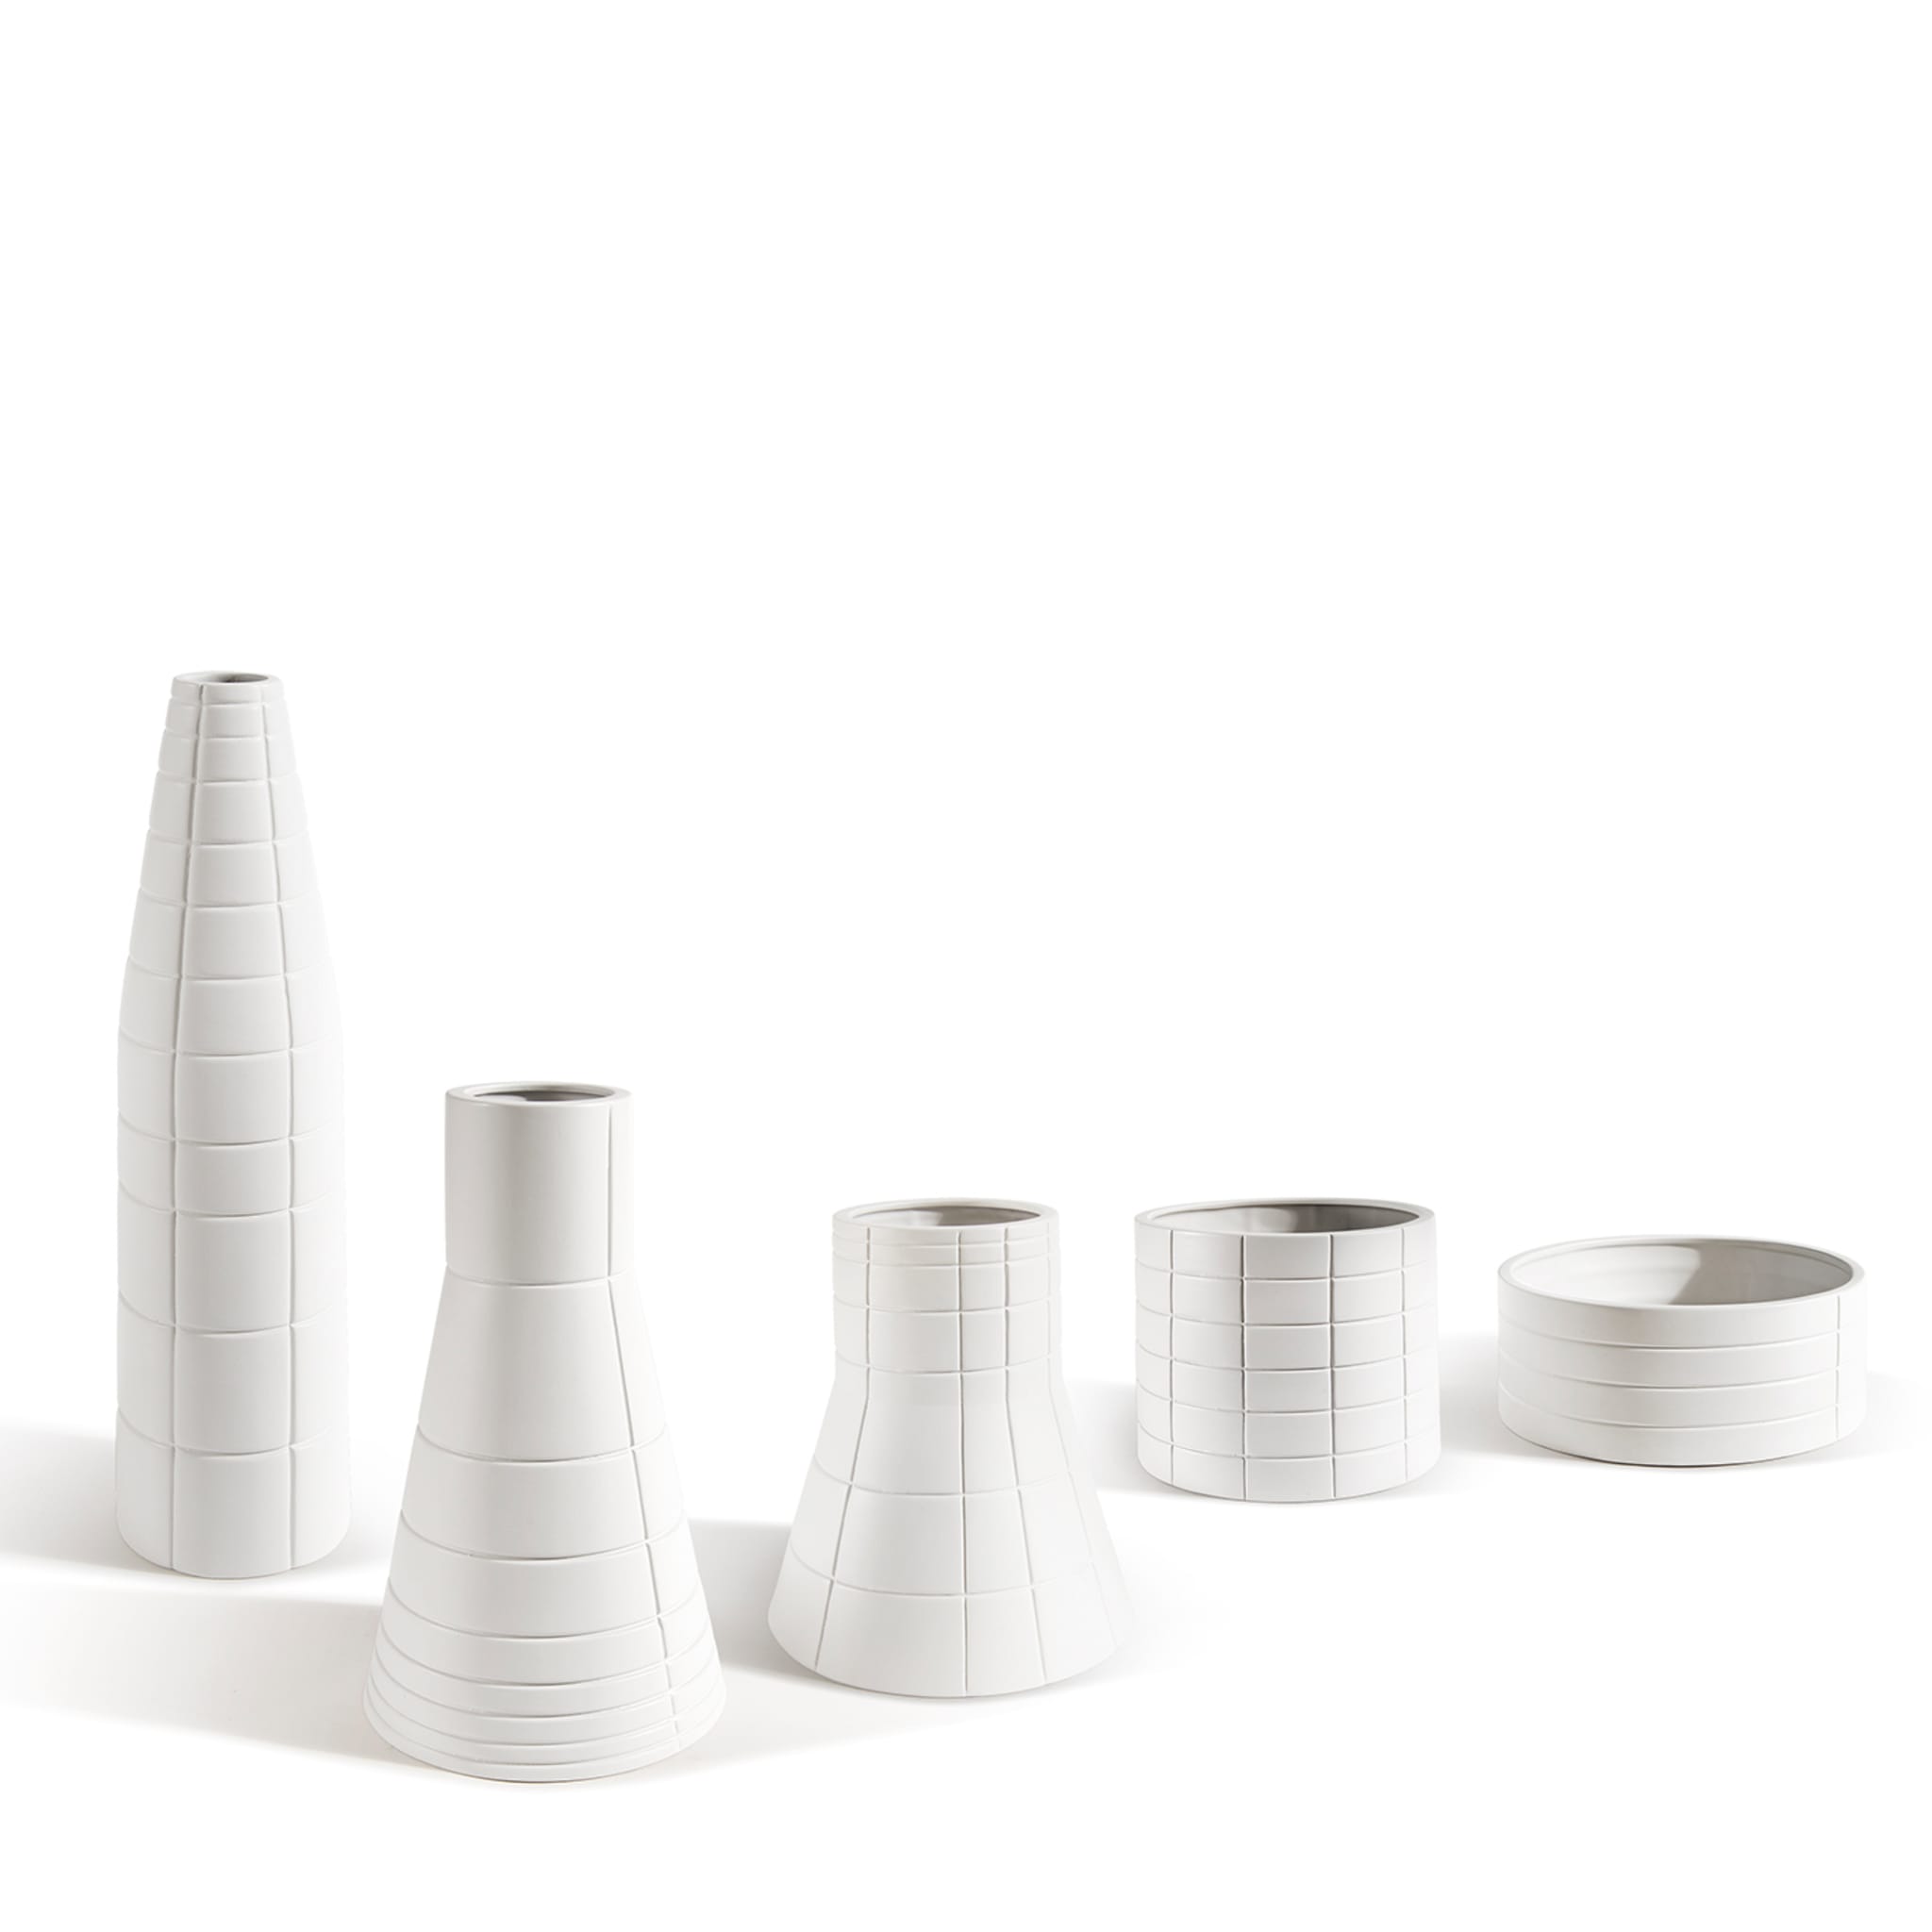 Rikuadra White Ceramic Vase #4 - Alternative view 1